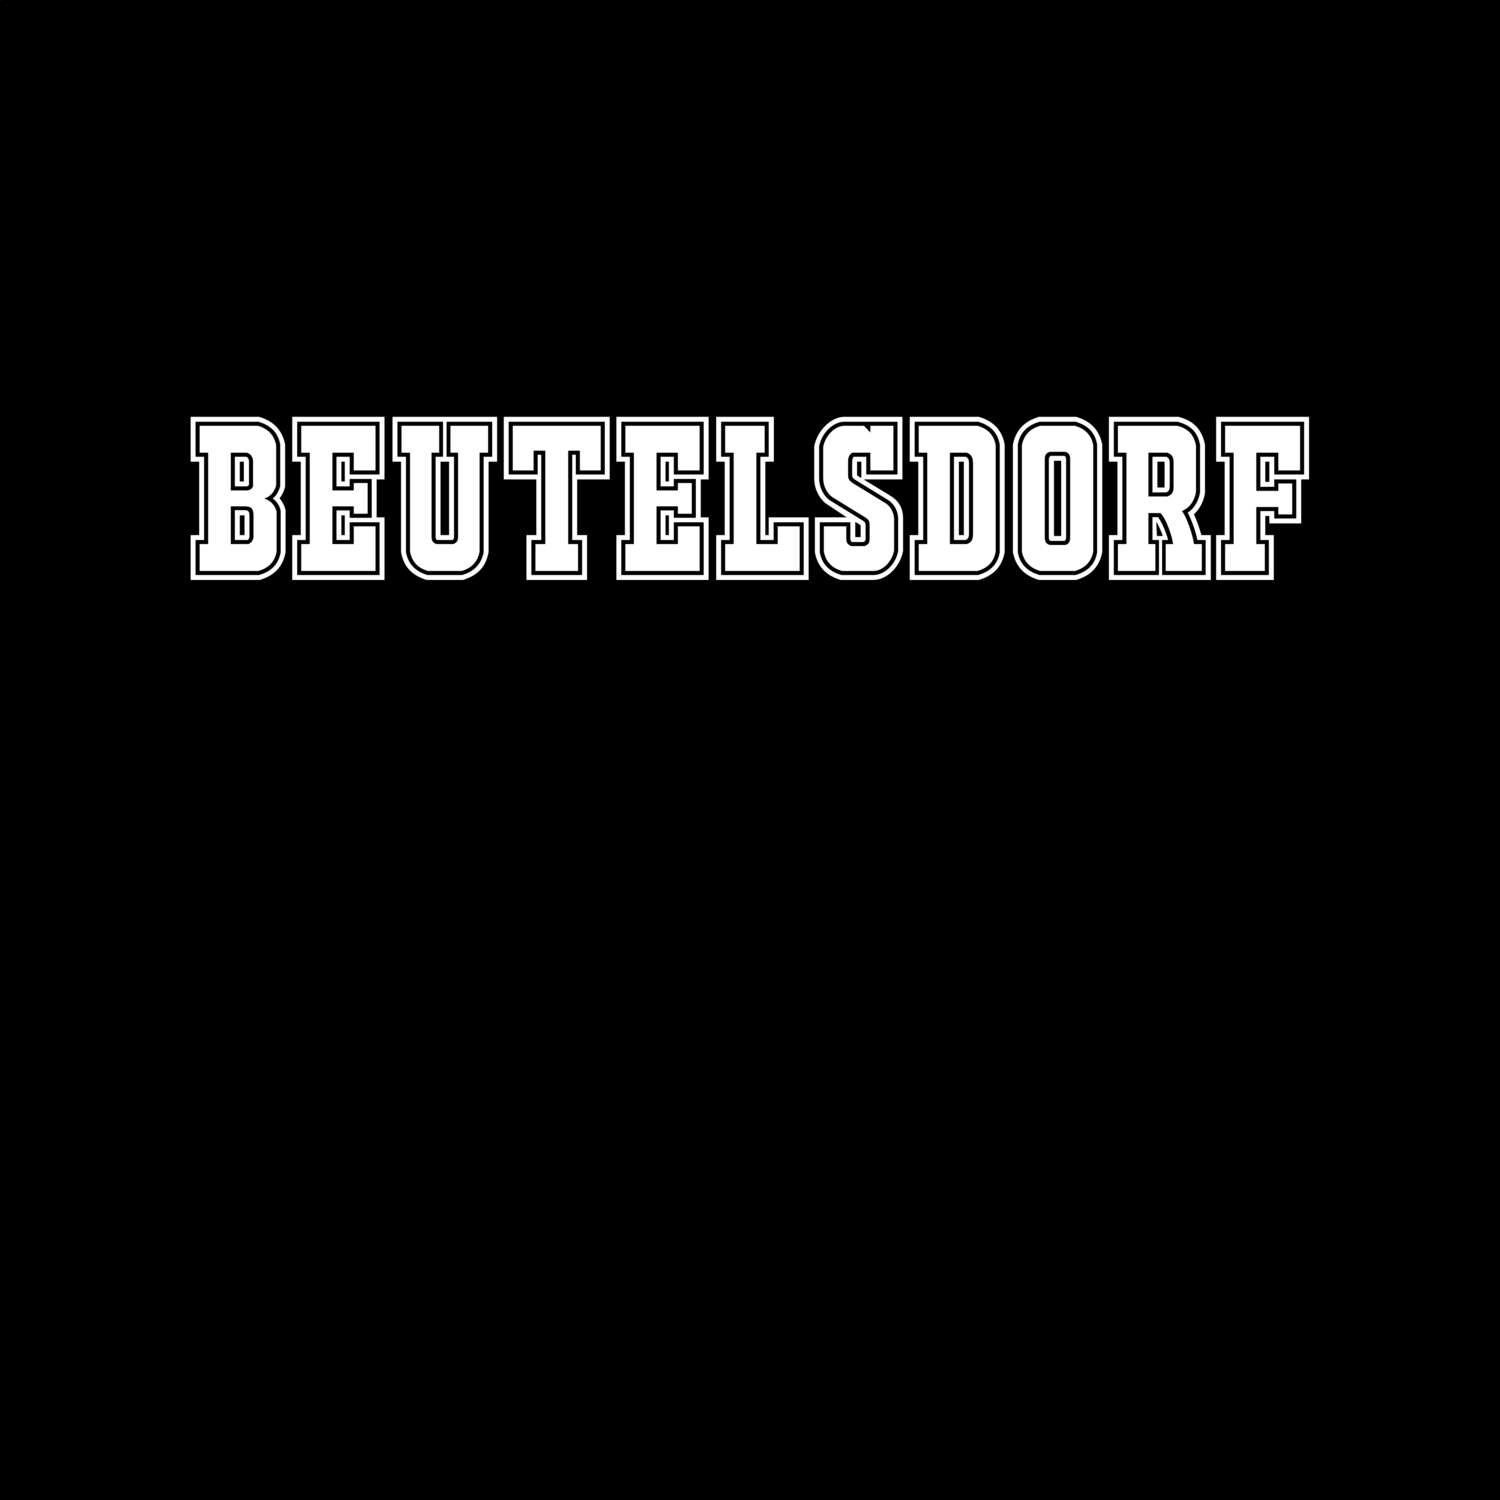 Beutelsdorf T-Shirt »Classic«